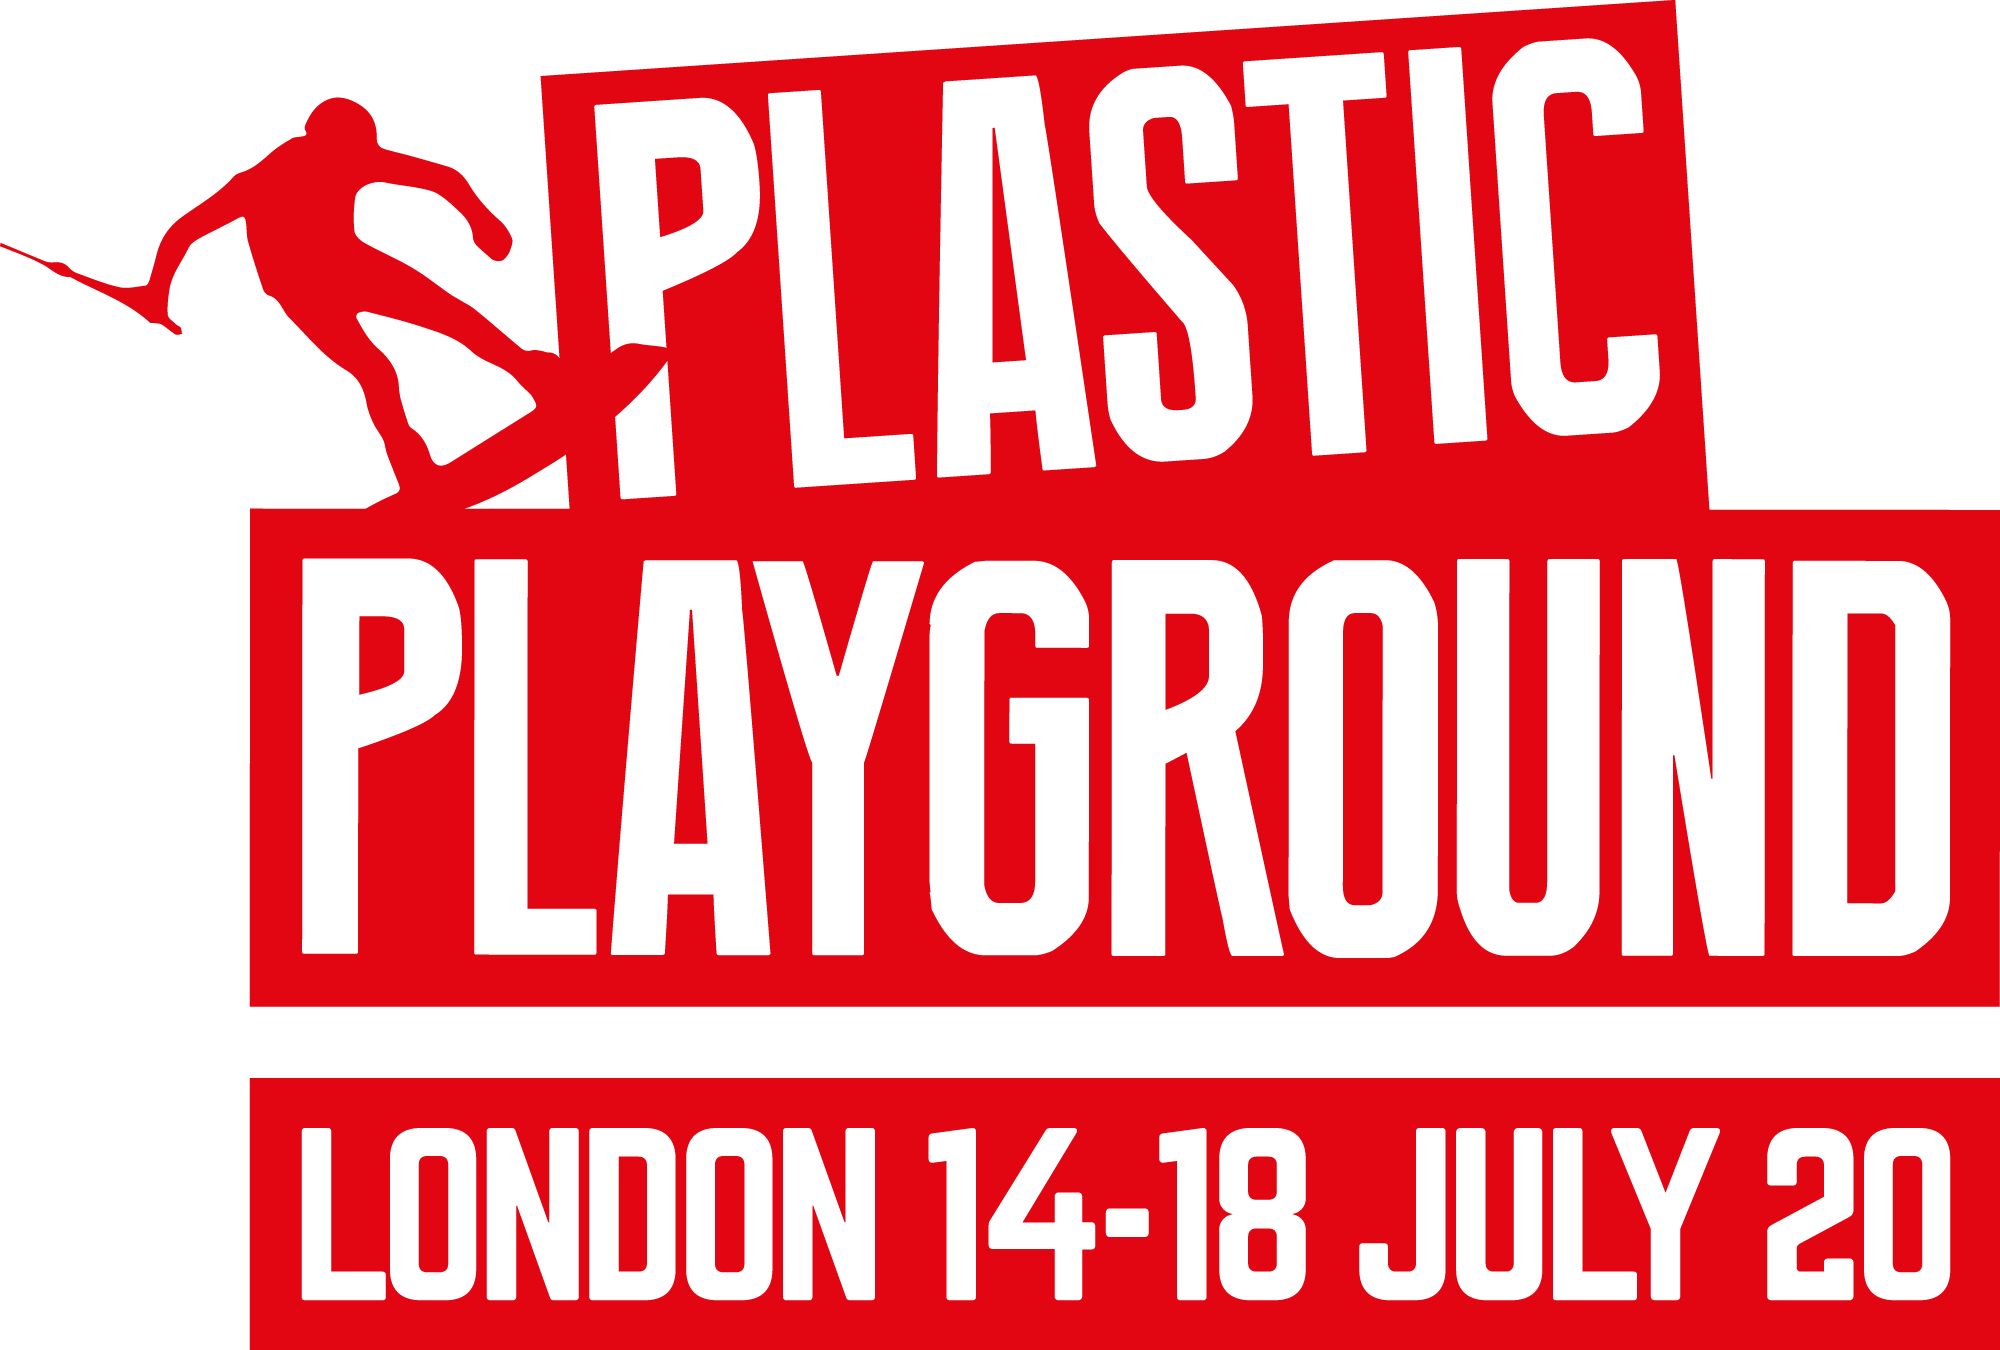 Plastic Playground - London 2020